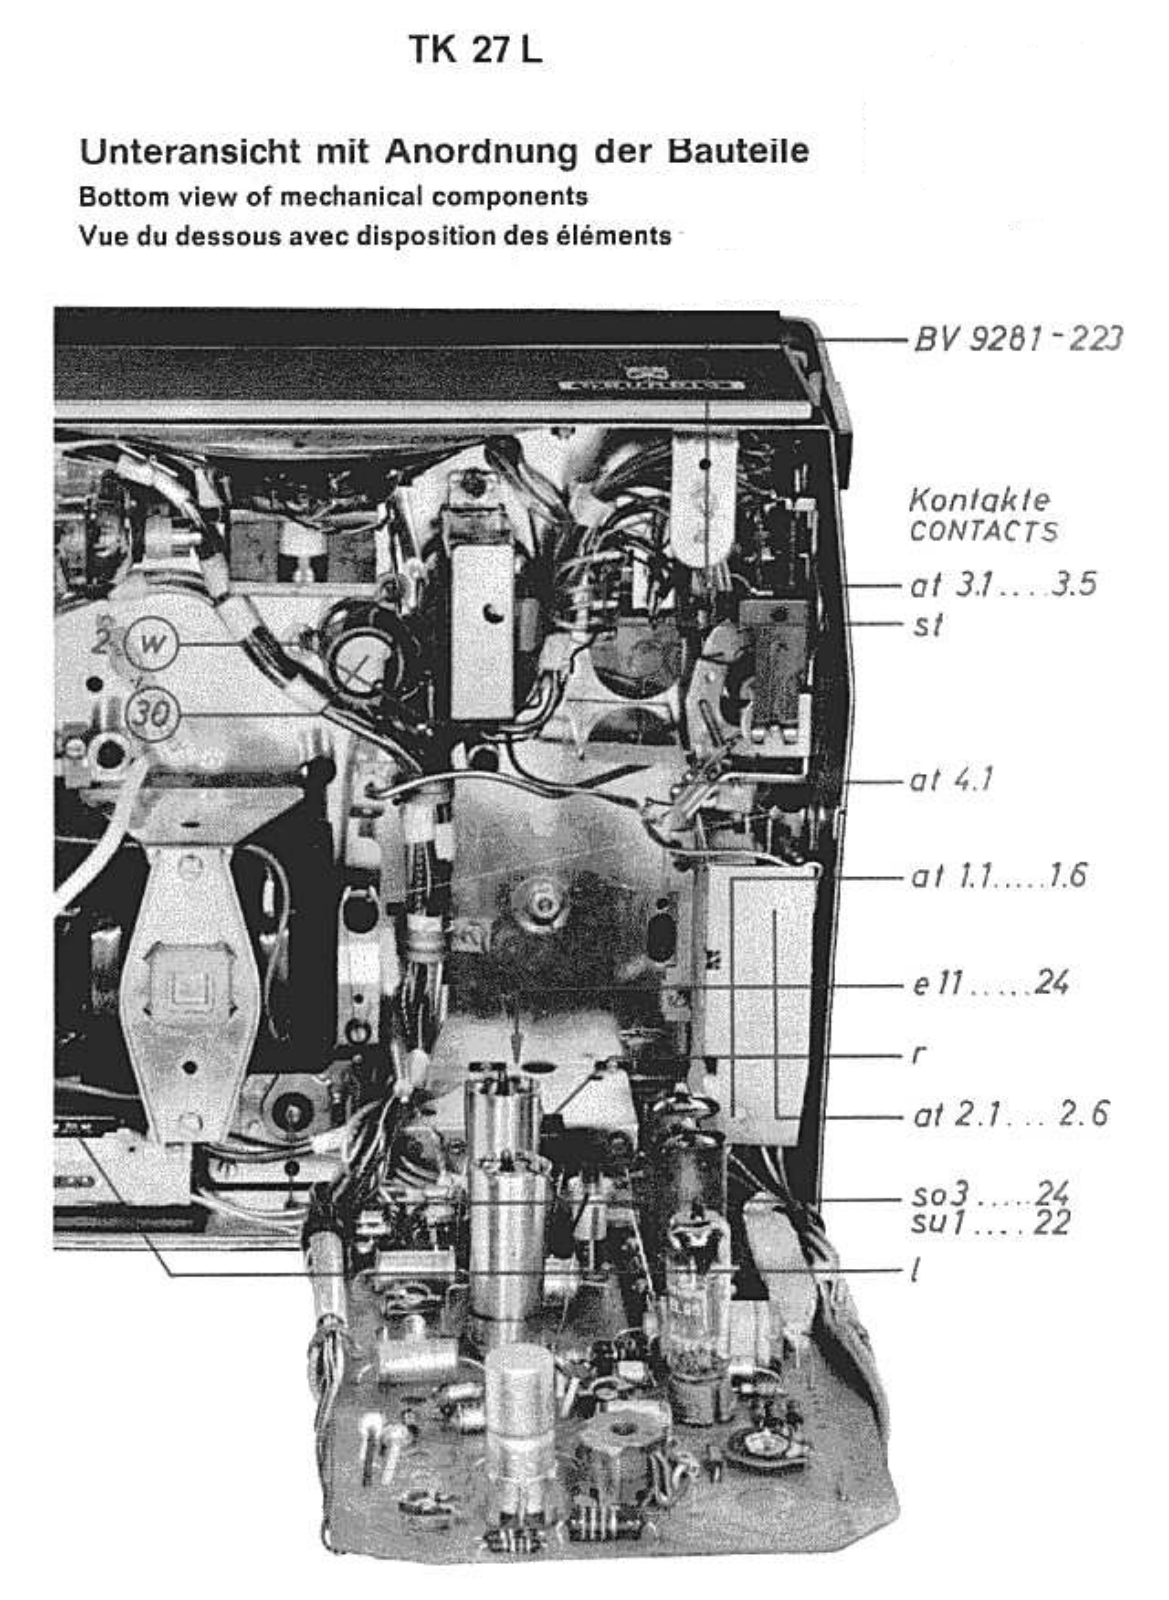 Grundig TK-27-deLuxe Service Manual